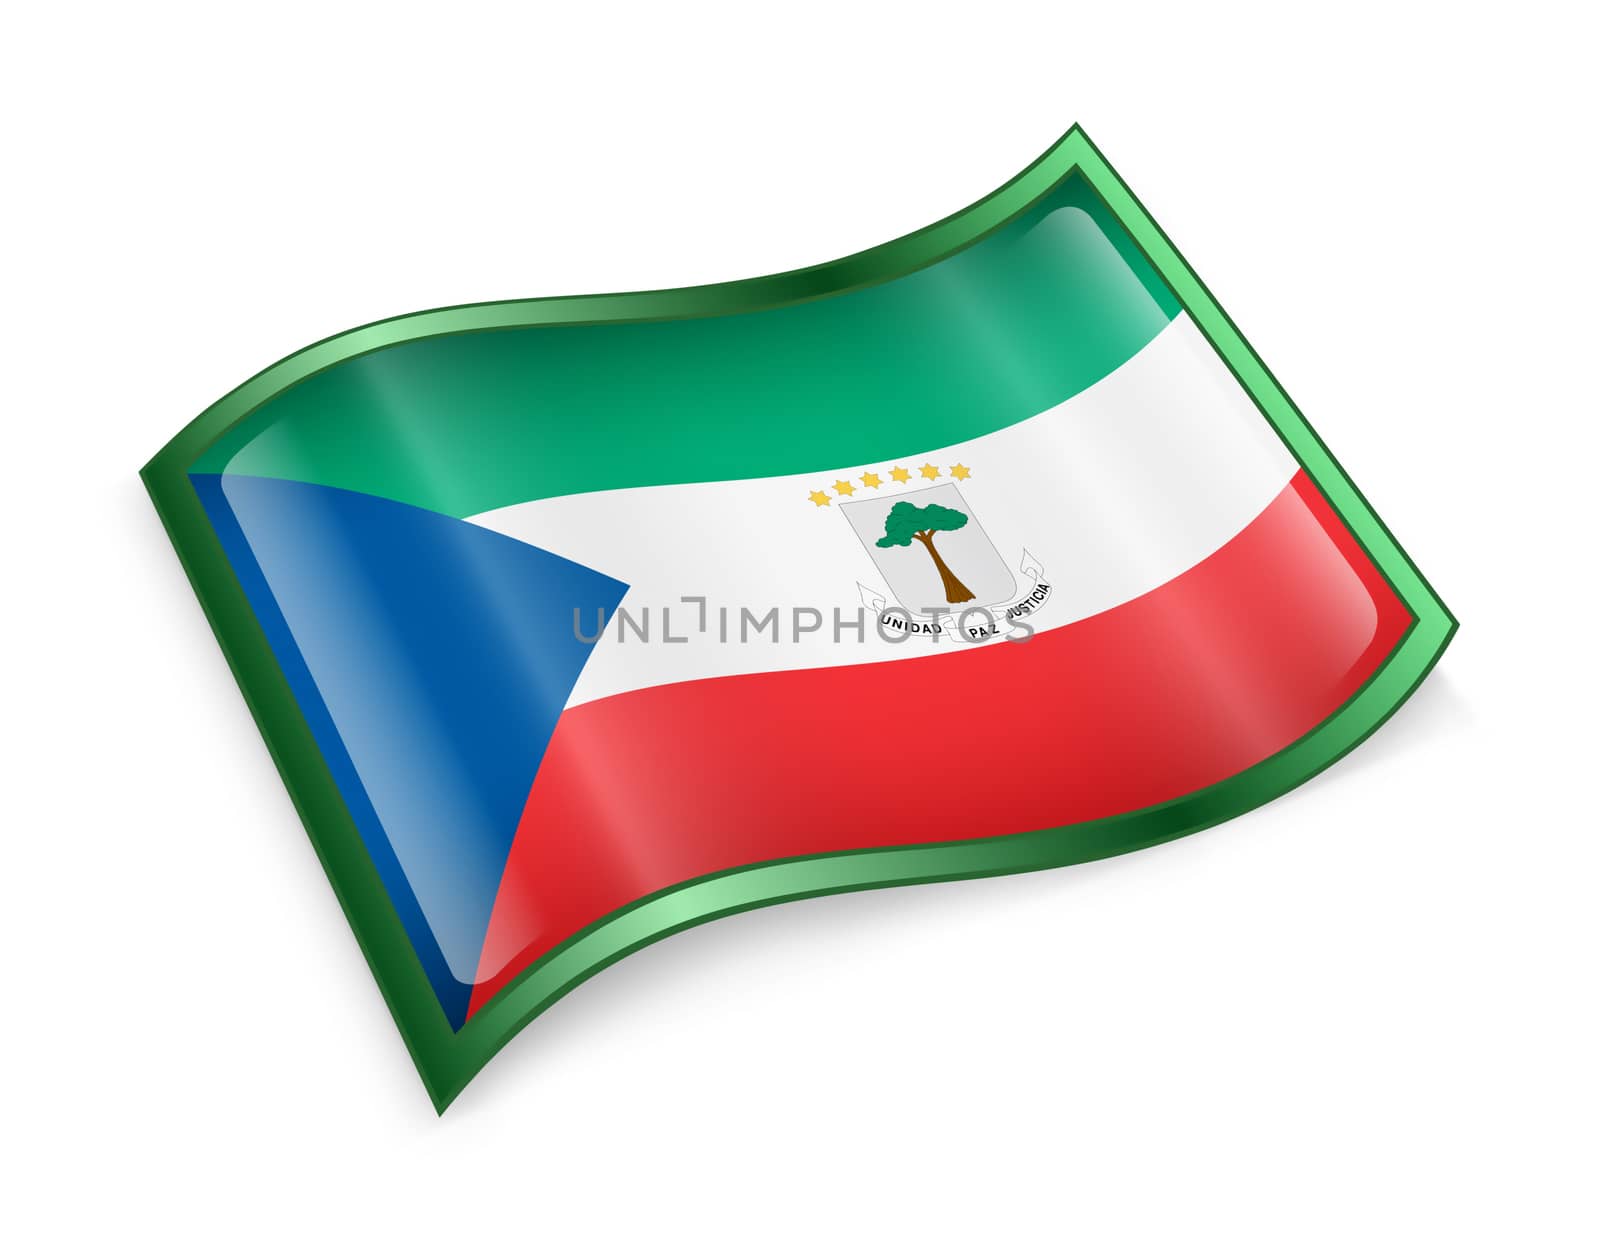 Equatorial Guinea Flag icon, isolated on white background.